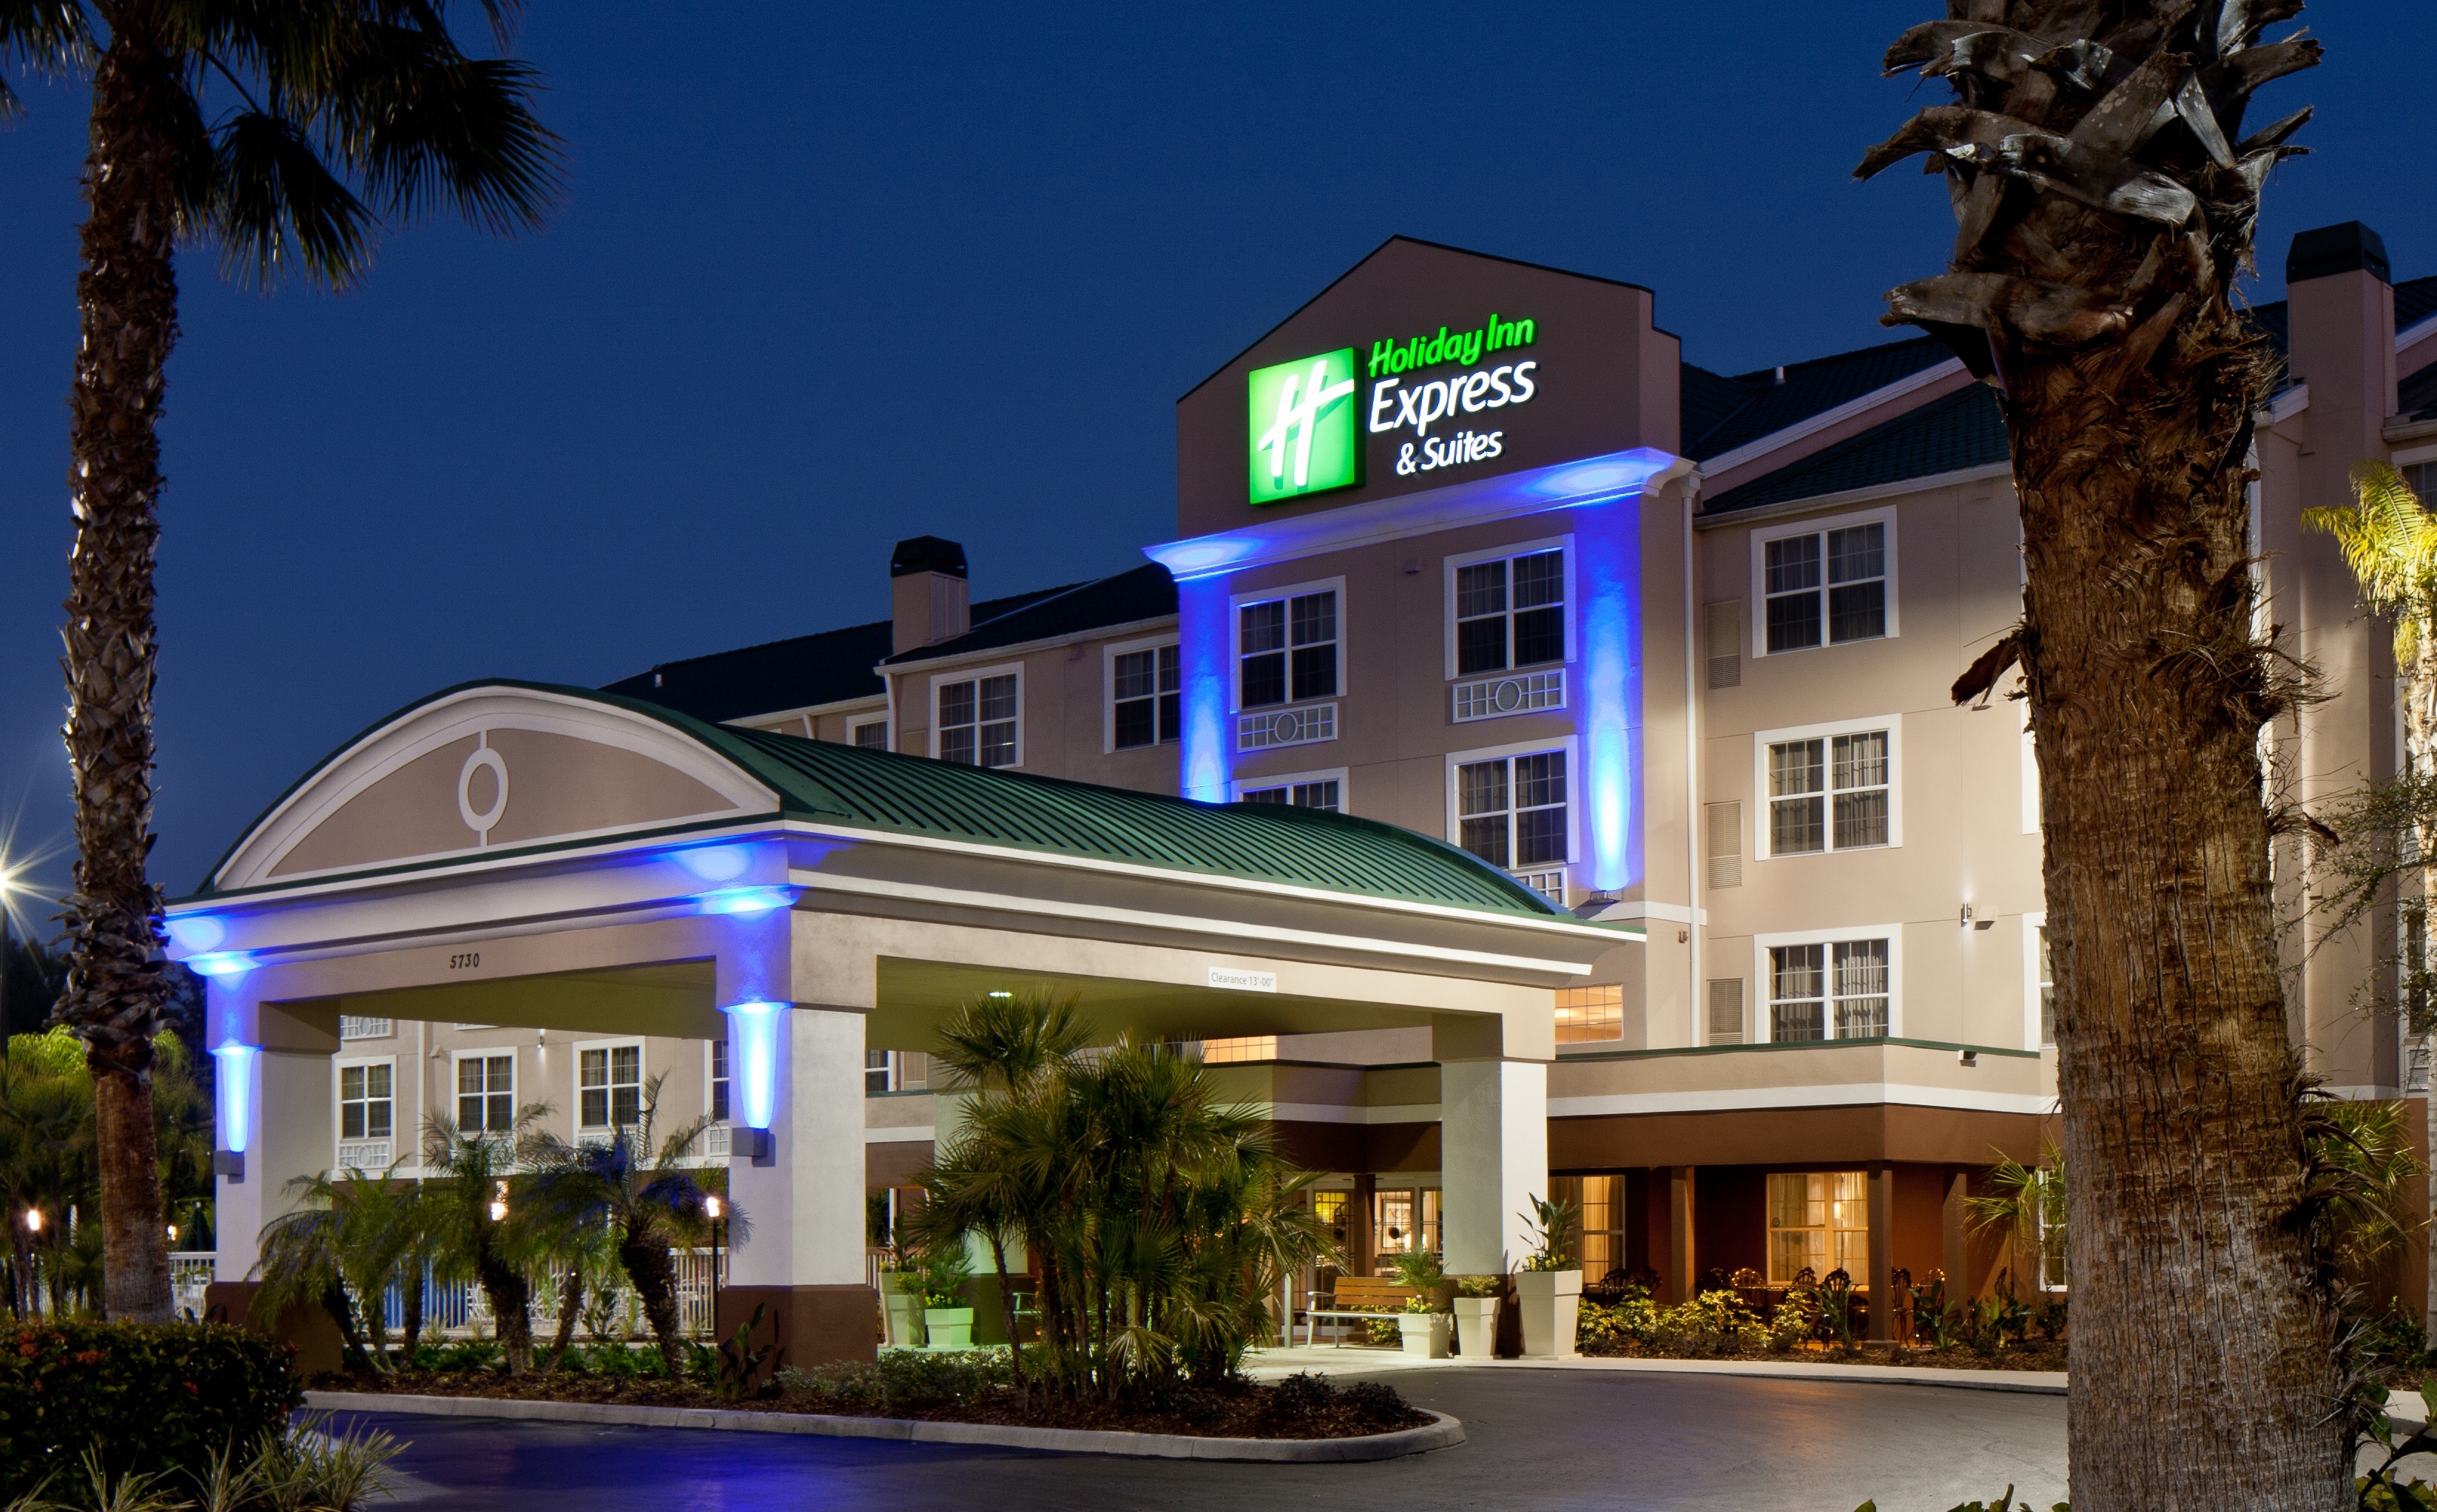 Photo of Holiday Inn Express & Suites Sarasota East - I-75, Sarasota, FL